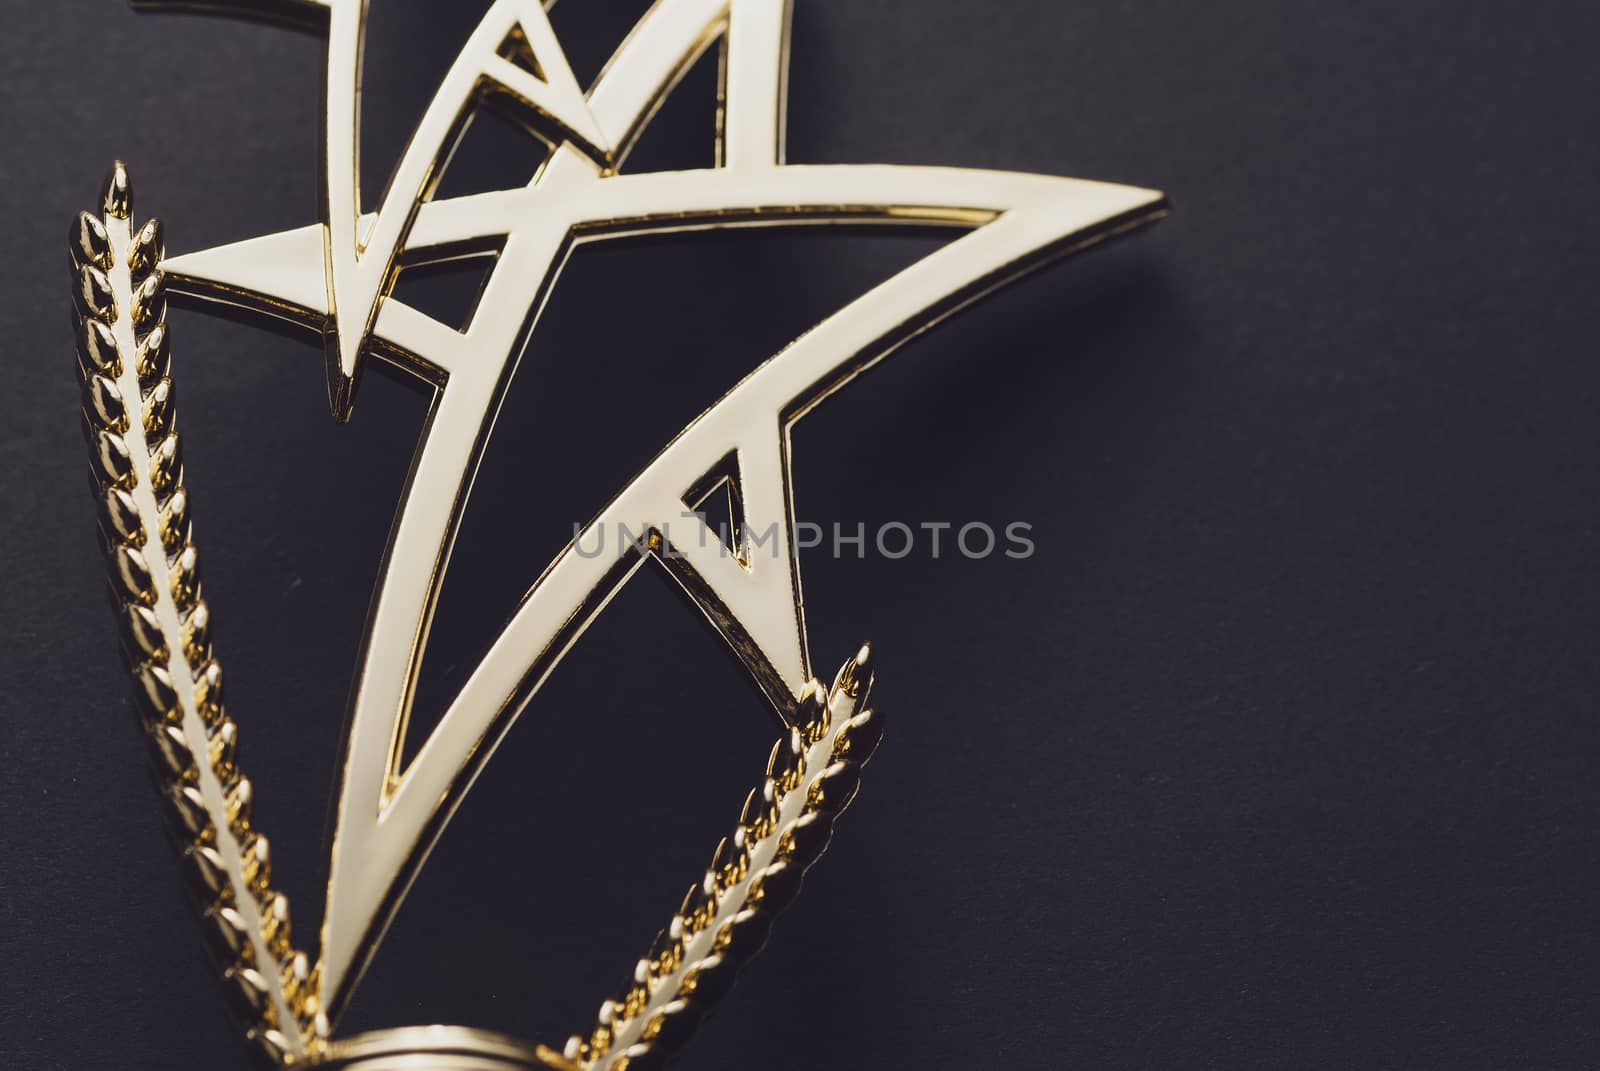 Golden trophy with pedestal in shape of triple star on black background